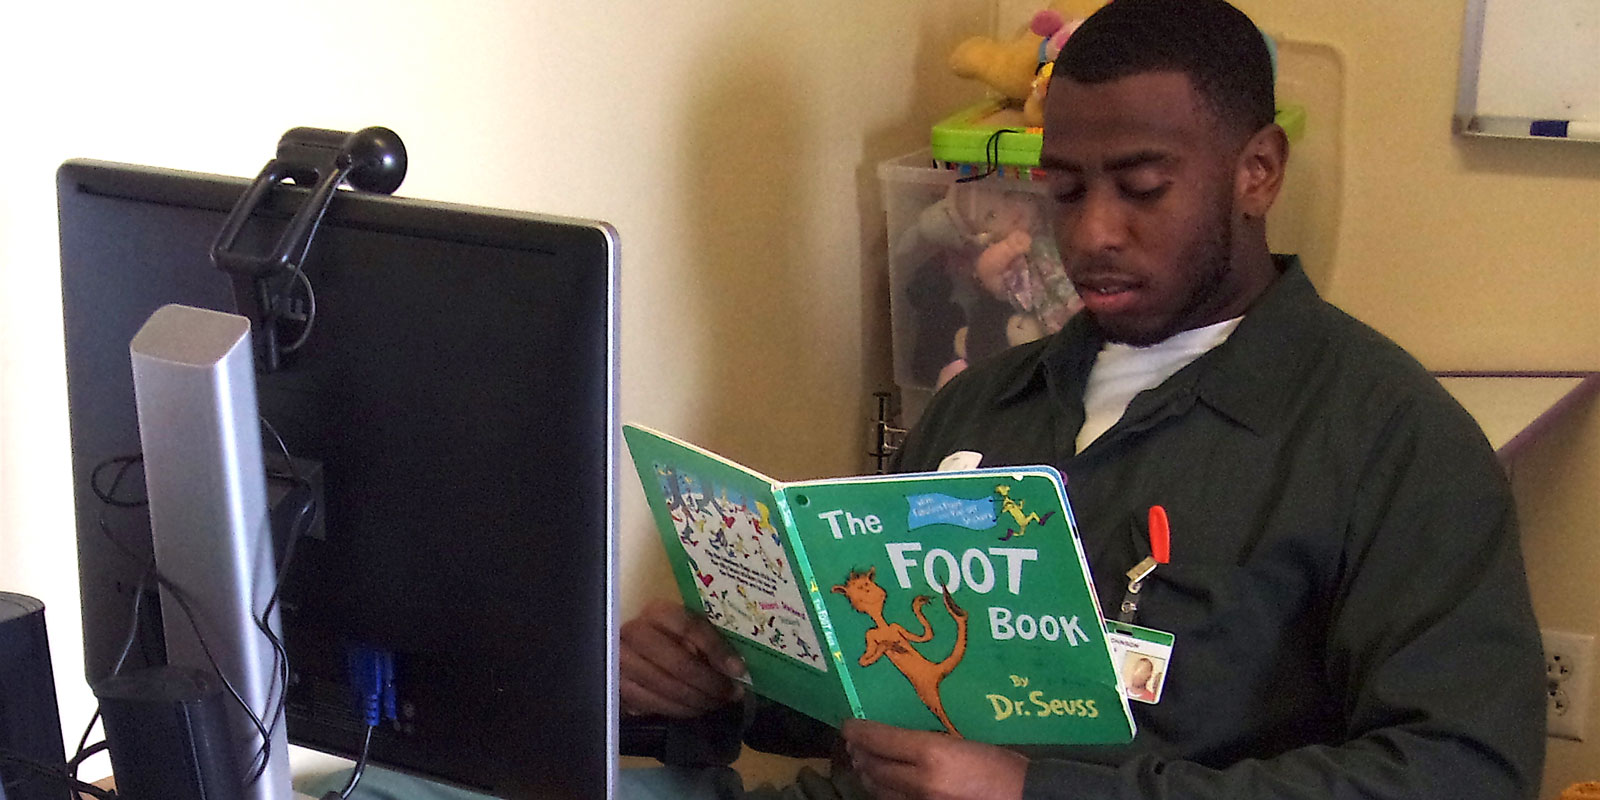 Mr. Johnson reading Dr. Seuss to his kids via video